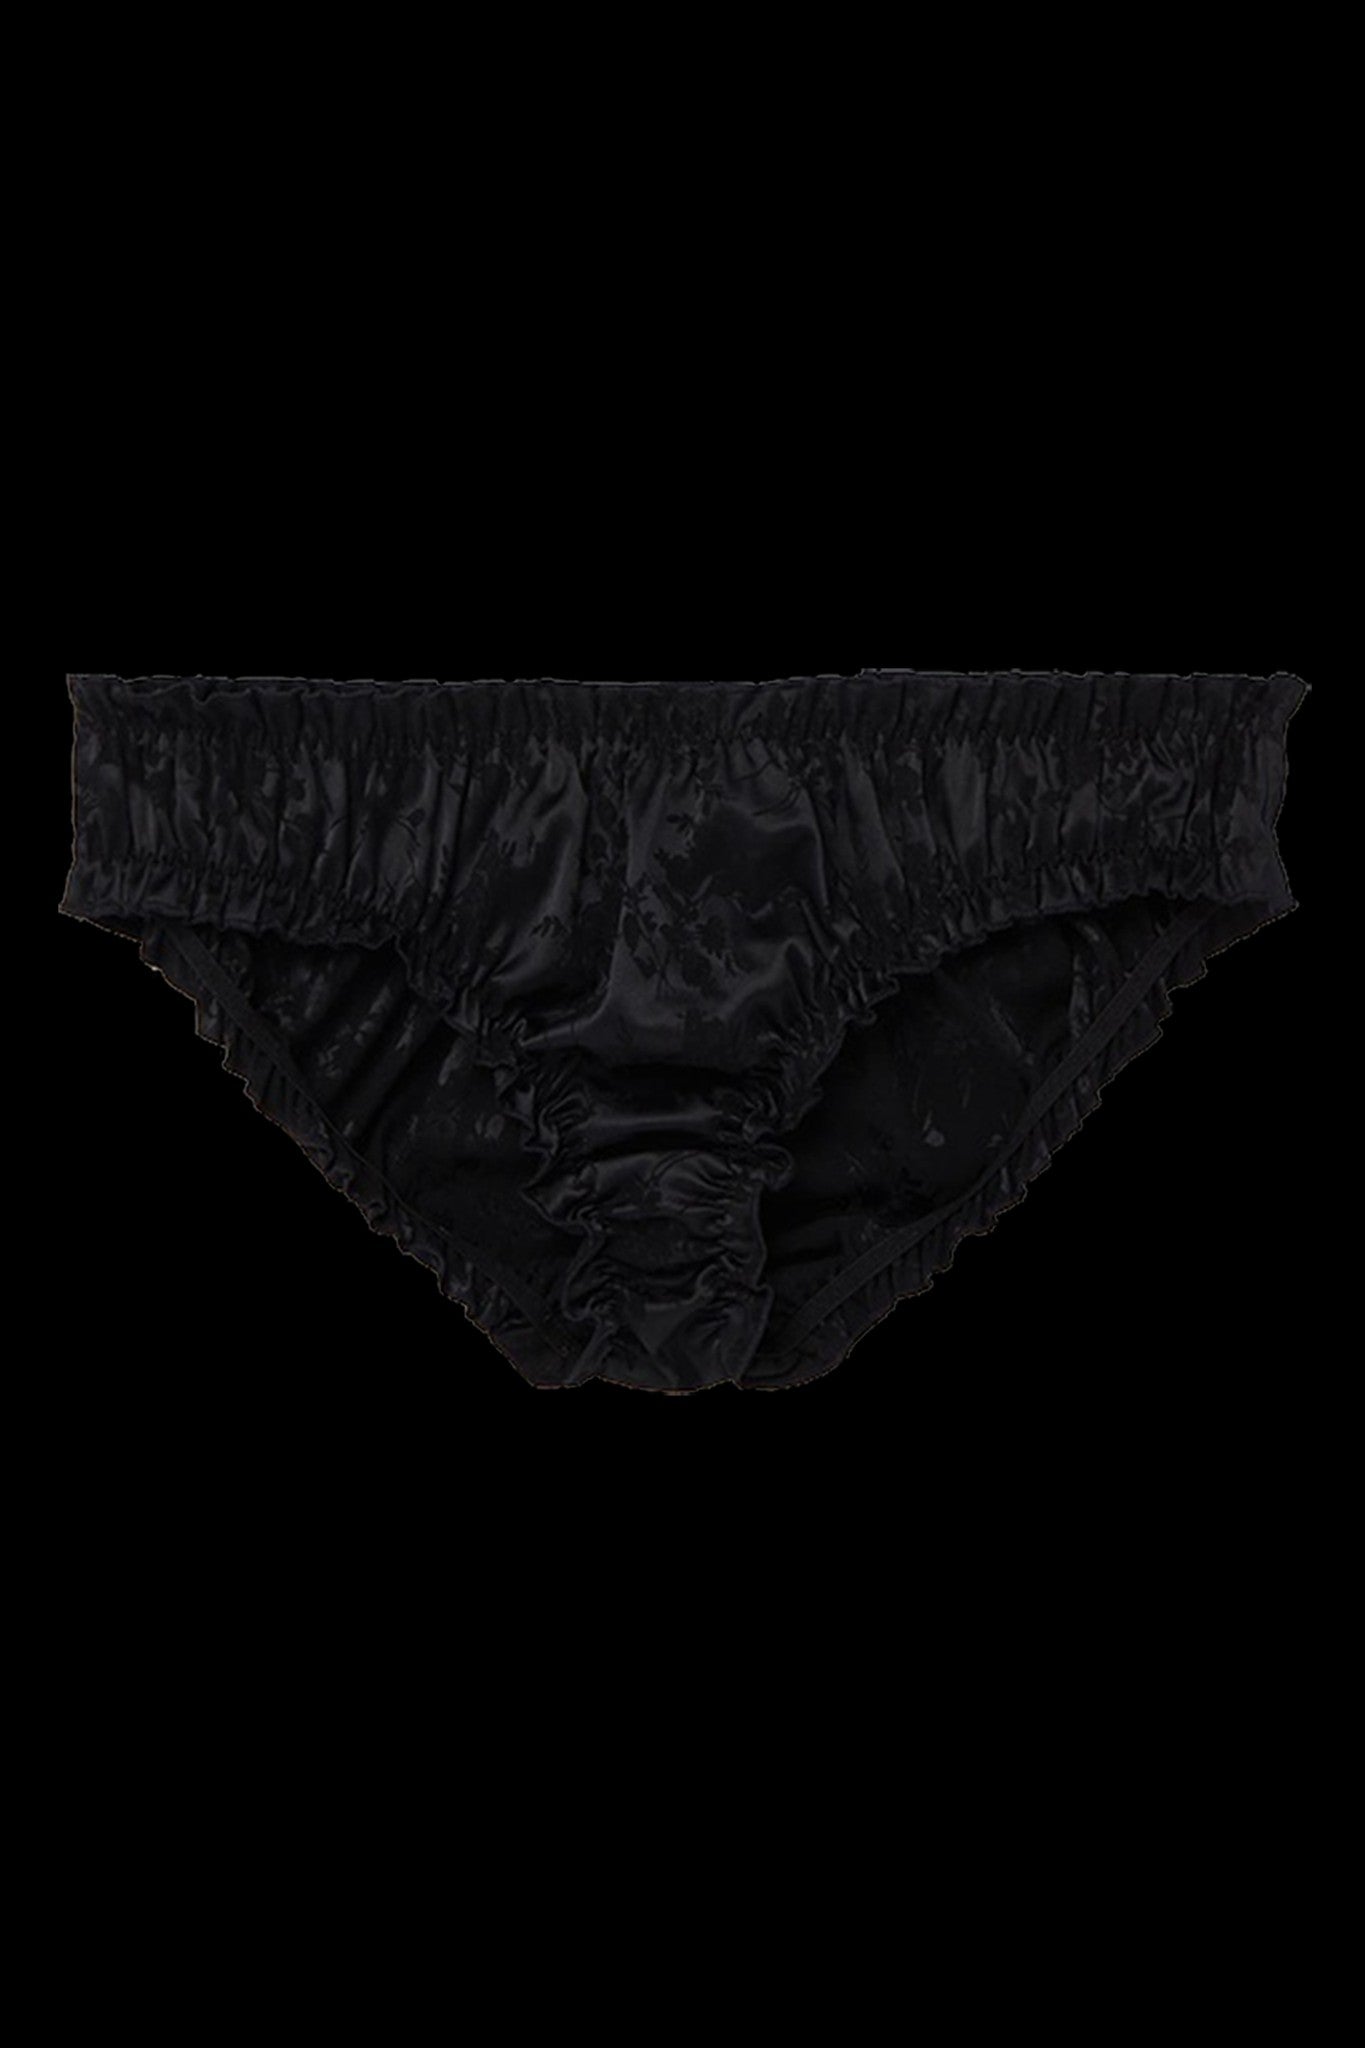 cyrus aria add black panties pics photo